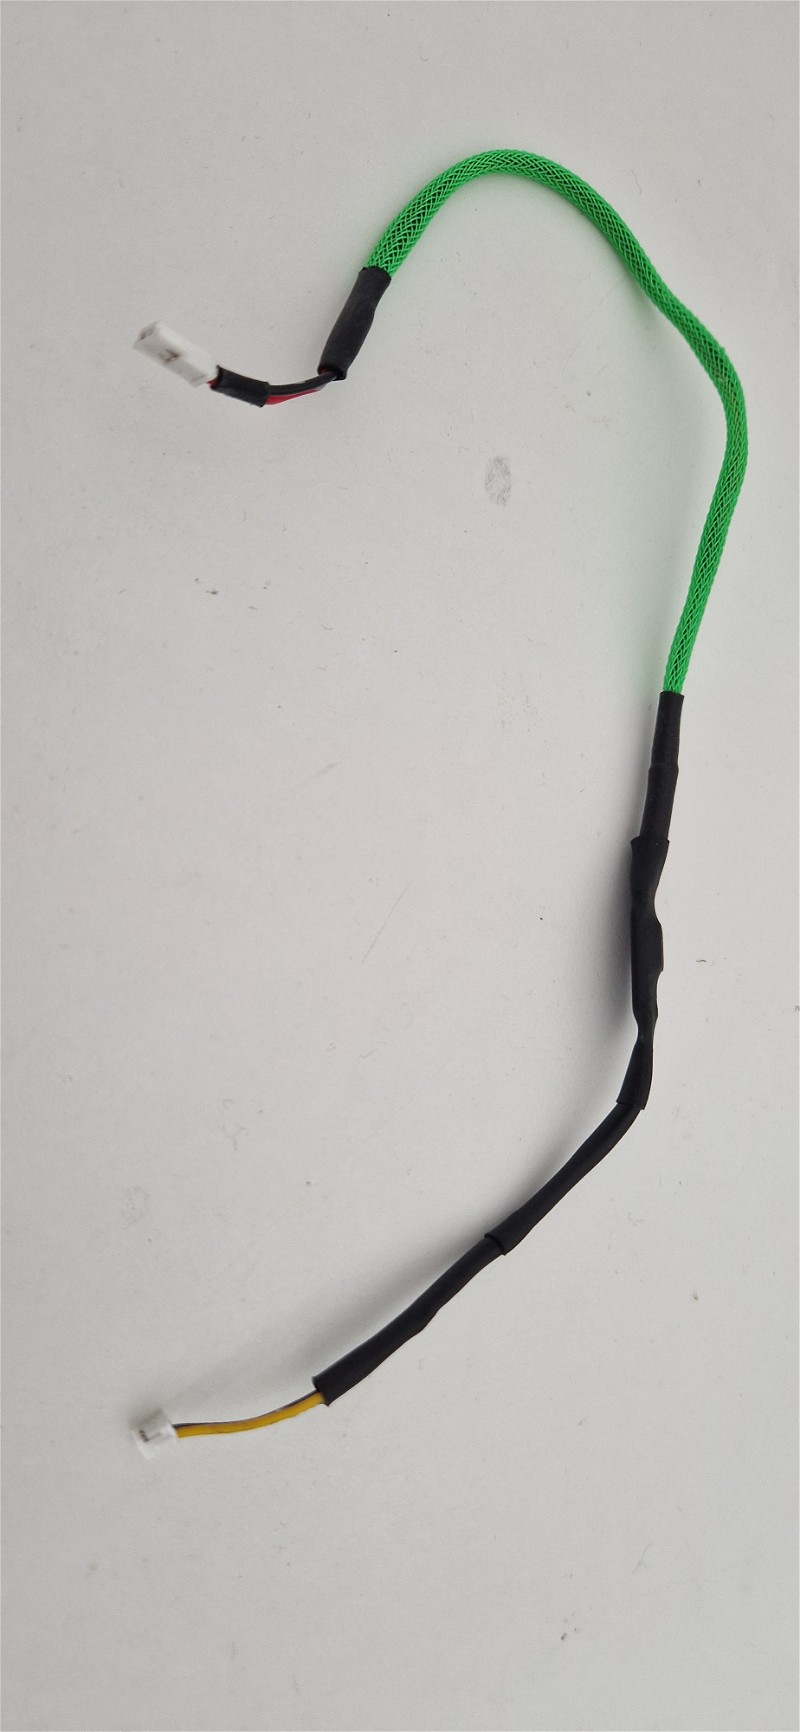 Afbeelding 1 van Maxx Hopup Led tracer cable voor Hpa Fcu